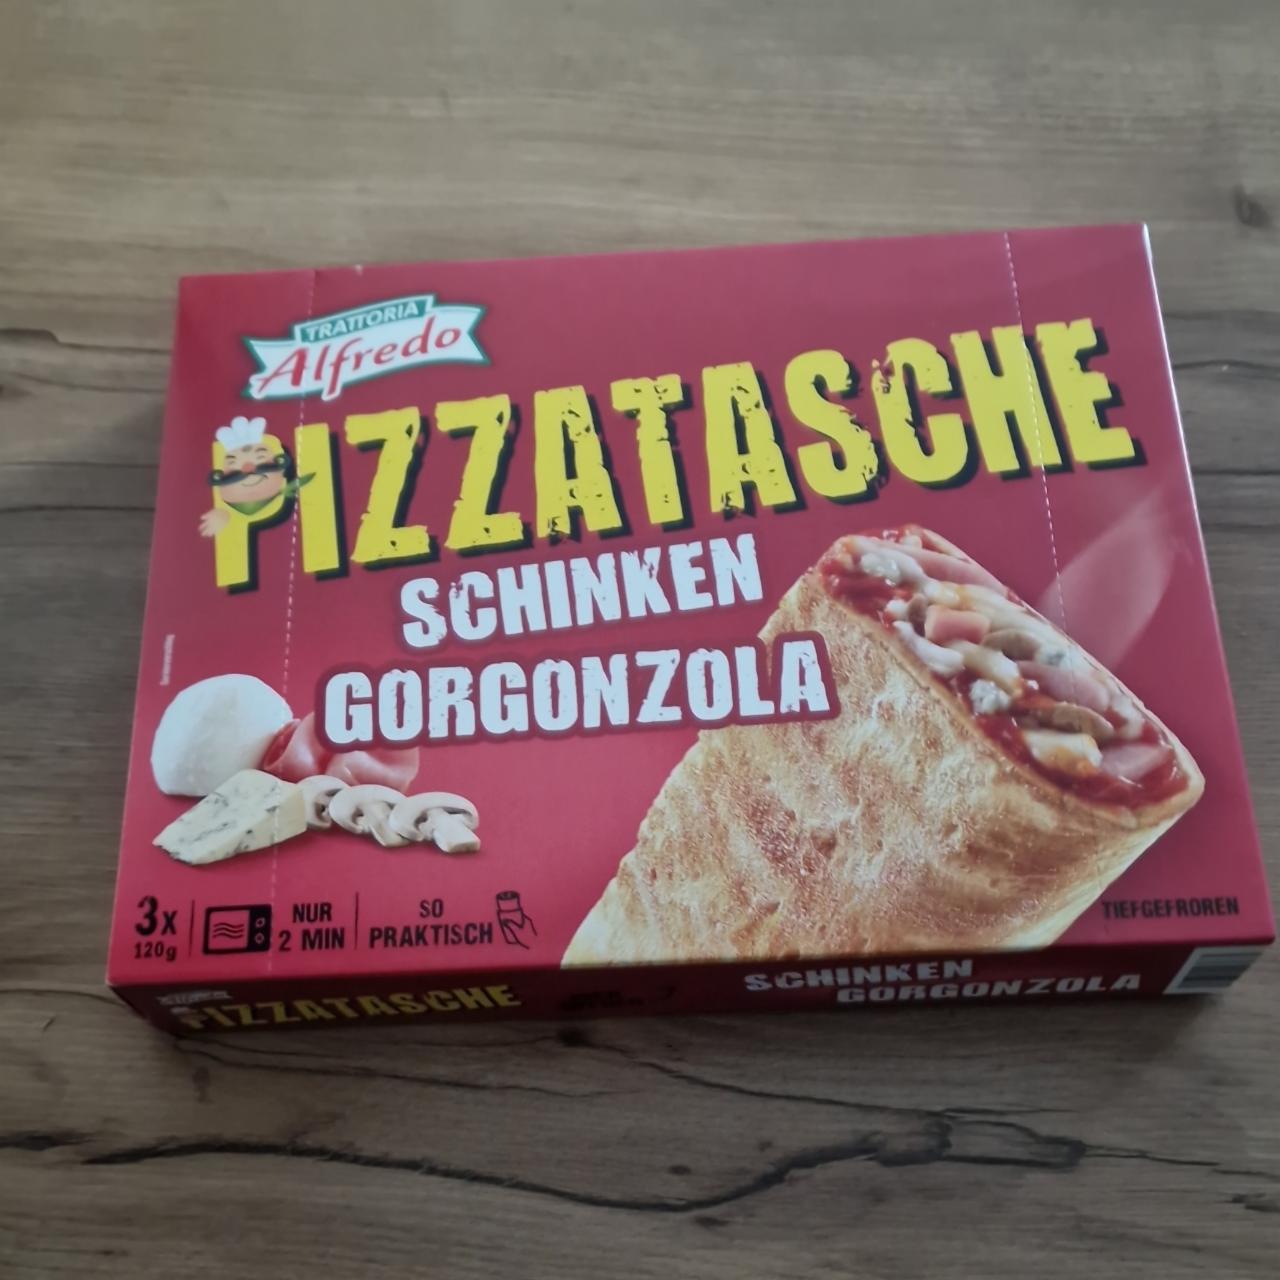 Fotografie - Pizzatasche Schinken Gorgonzola Trattoria Alfredo